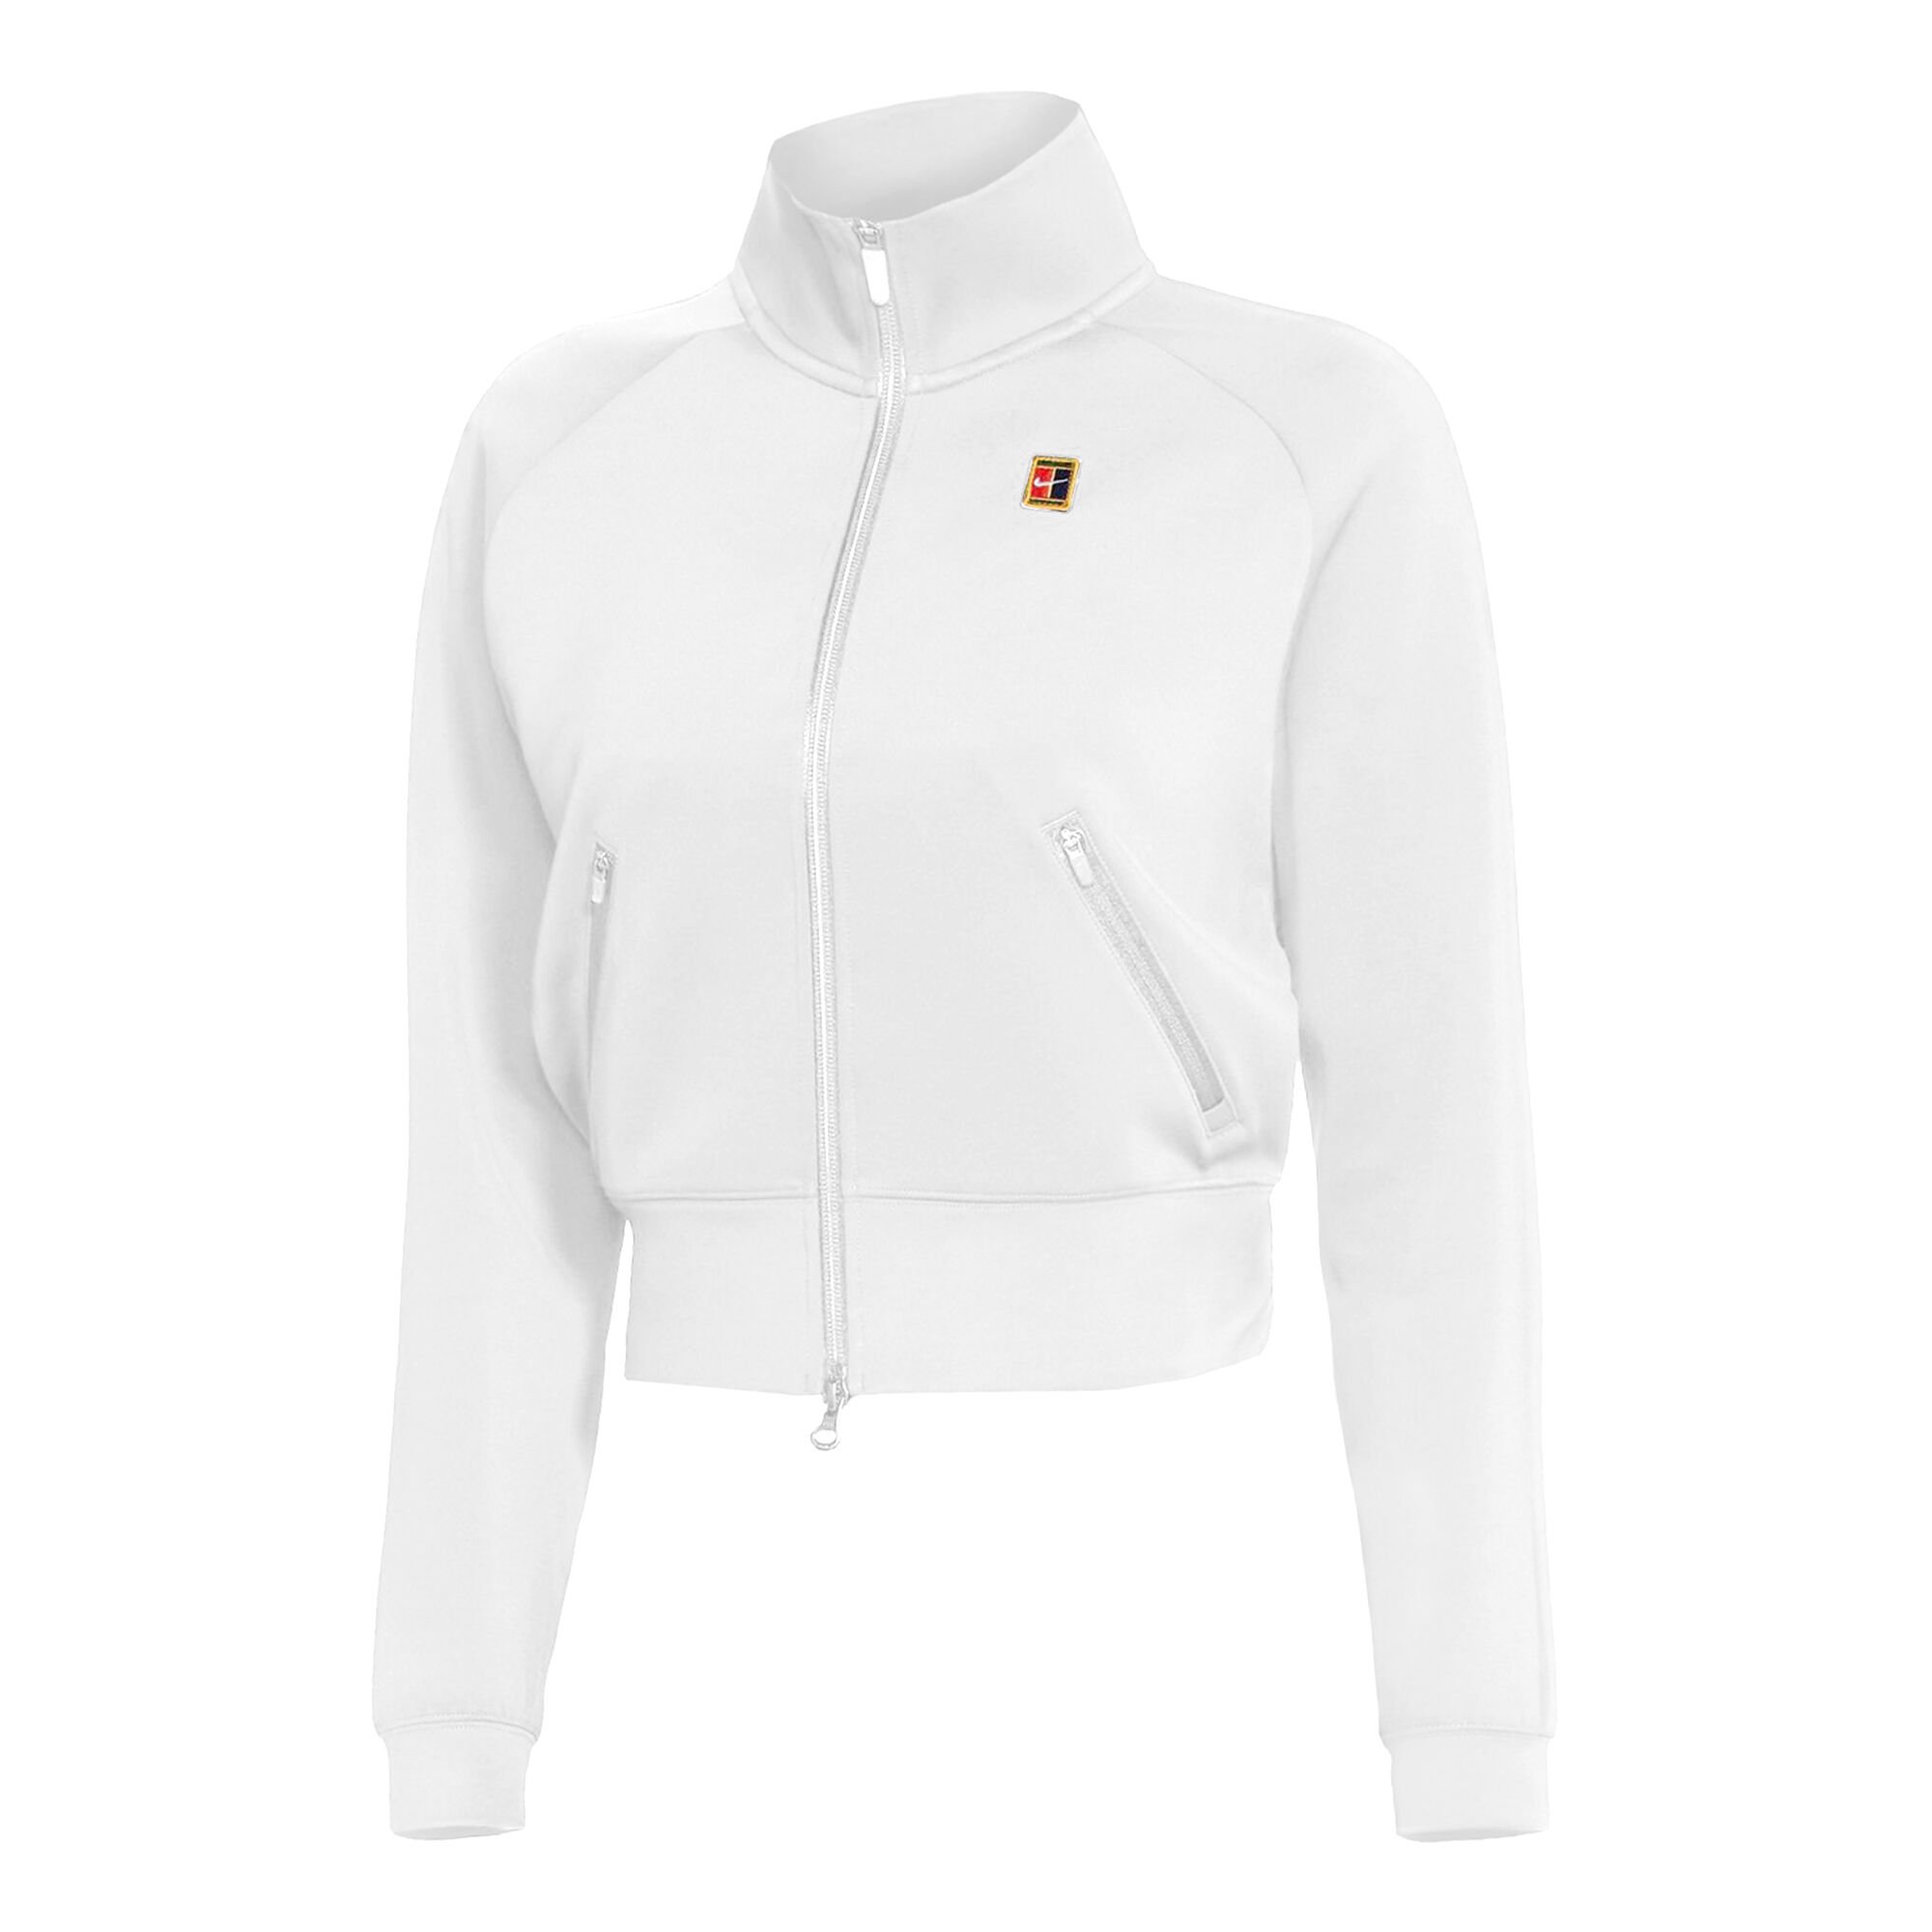 Portavoz saltar lamentar buy Nike Court Heritage Training Jacket Women - White online | Tennis-Point